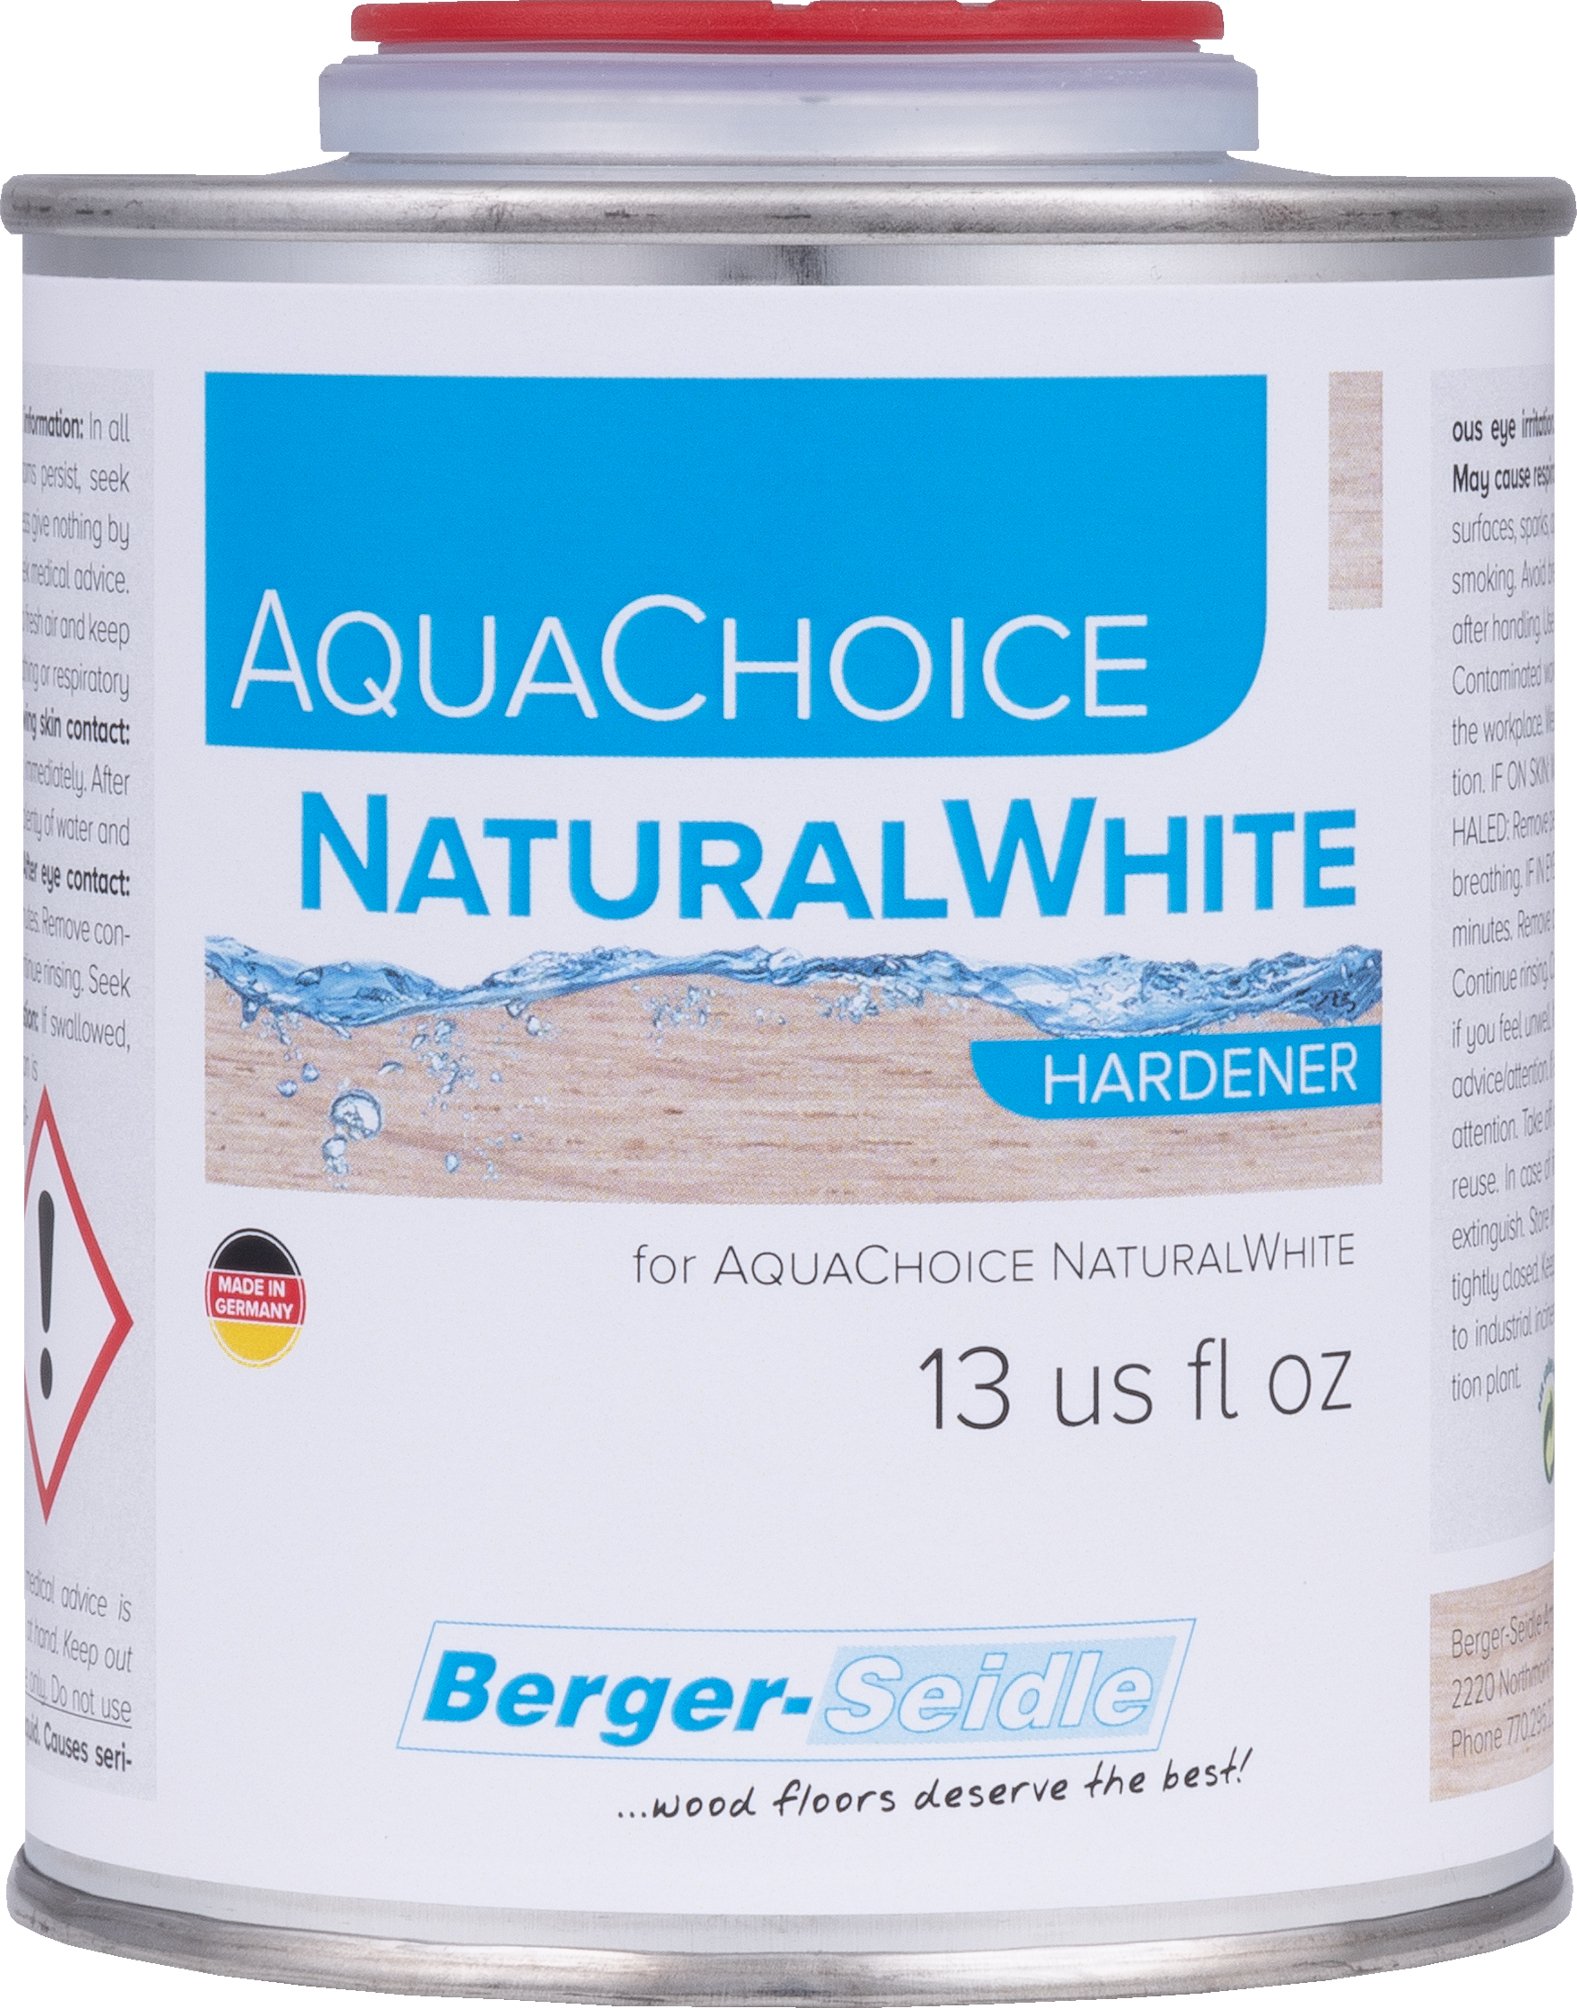 AquaChoice NaturalWhite Hardener rgb.jpg